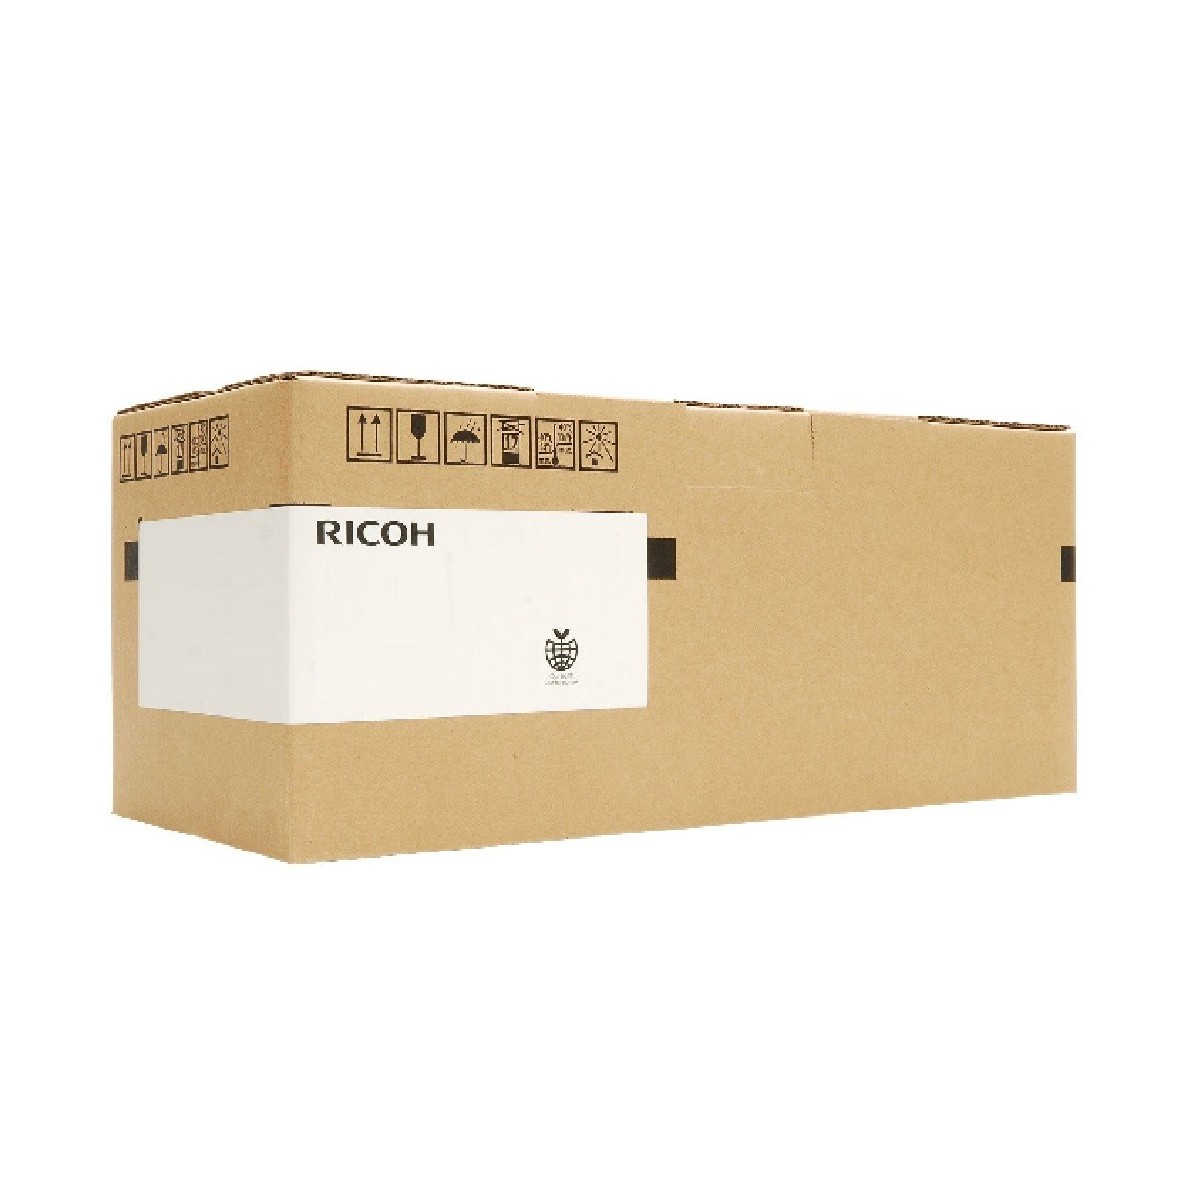 Ricoh D1064006 - Ricoh - Aficio MP C2051 Aficio MP C2551 - 1 pc(s)